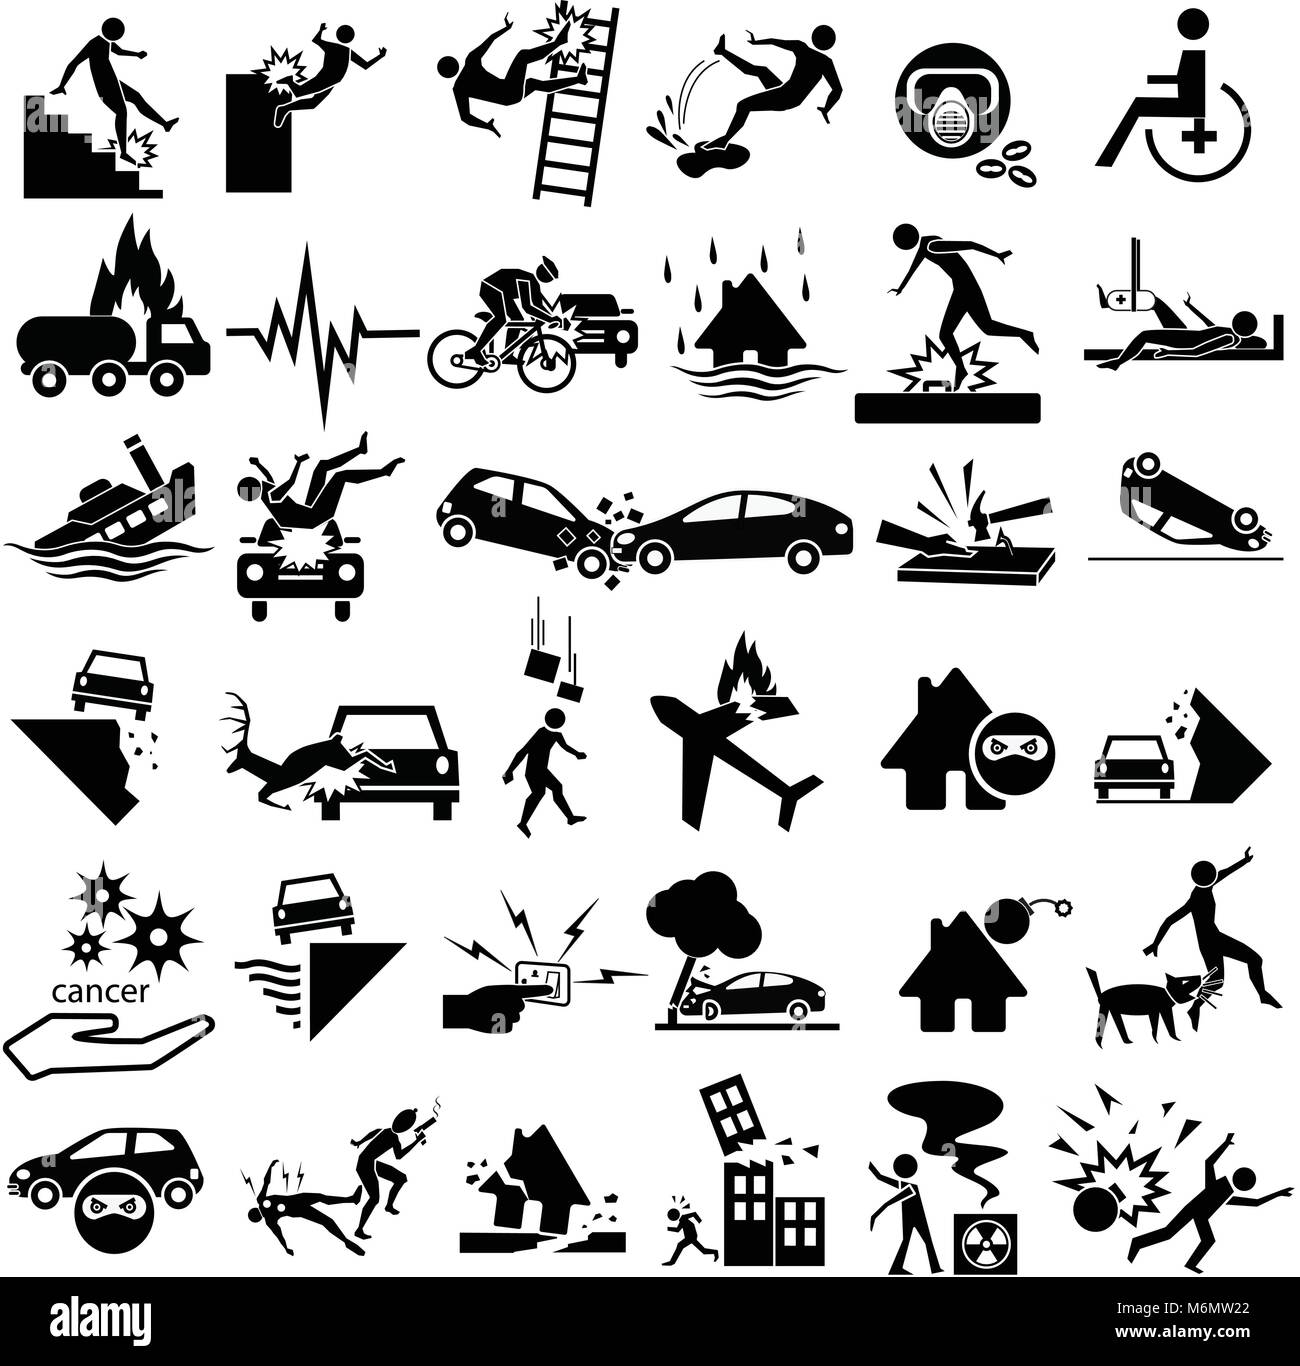 accident icons set for insurance, falling ladder, slippery, gas explosion, stumble, risks, cancer, bites, plane crash, thief, blast, murder, war, whee Stock Vector